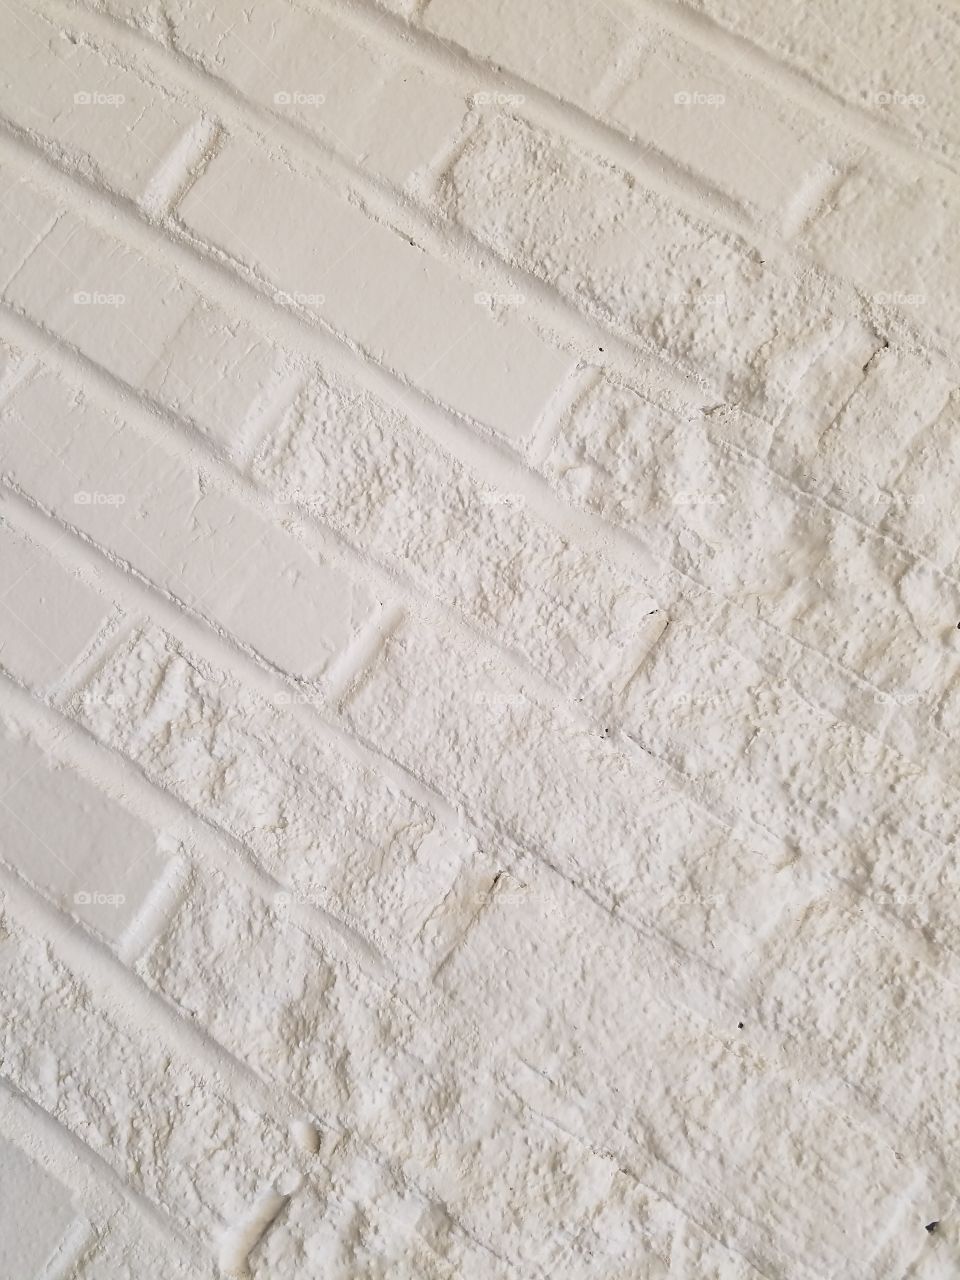 Brick texture study